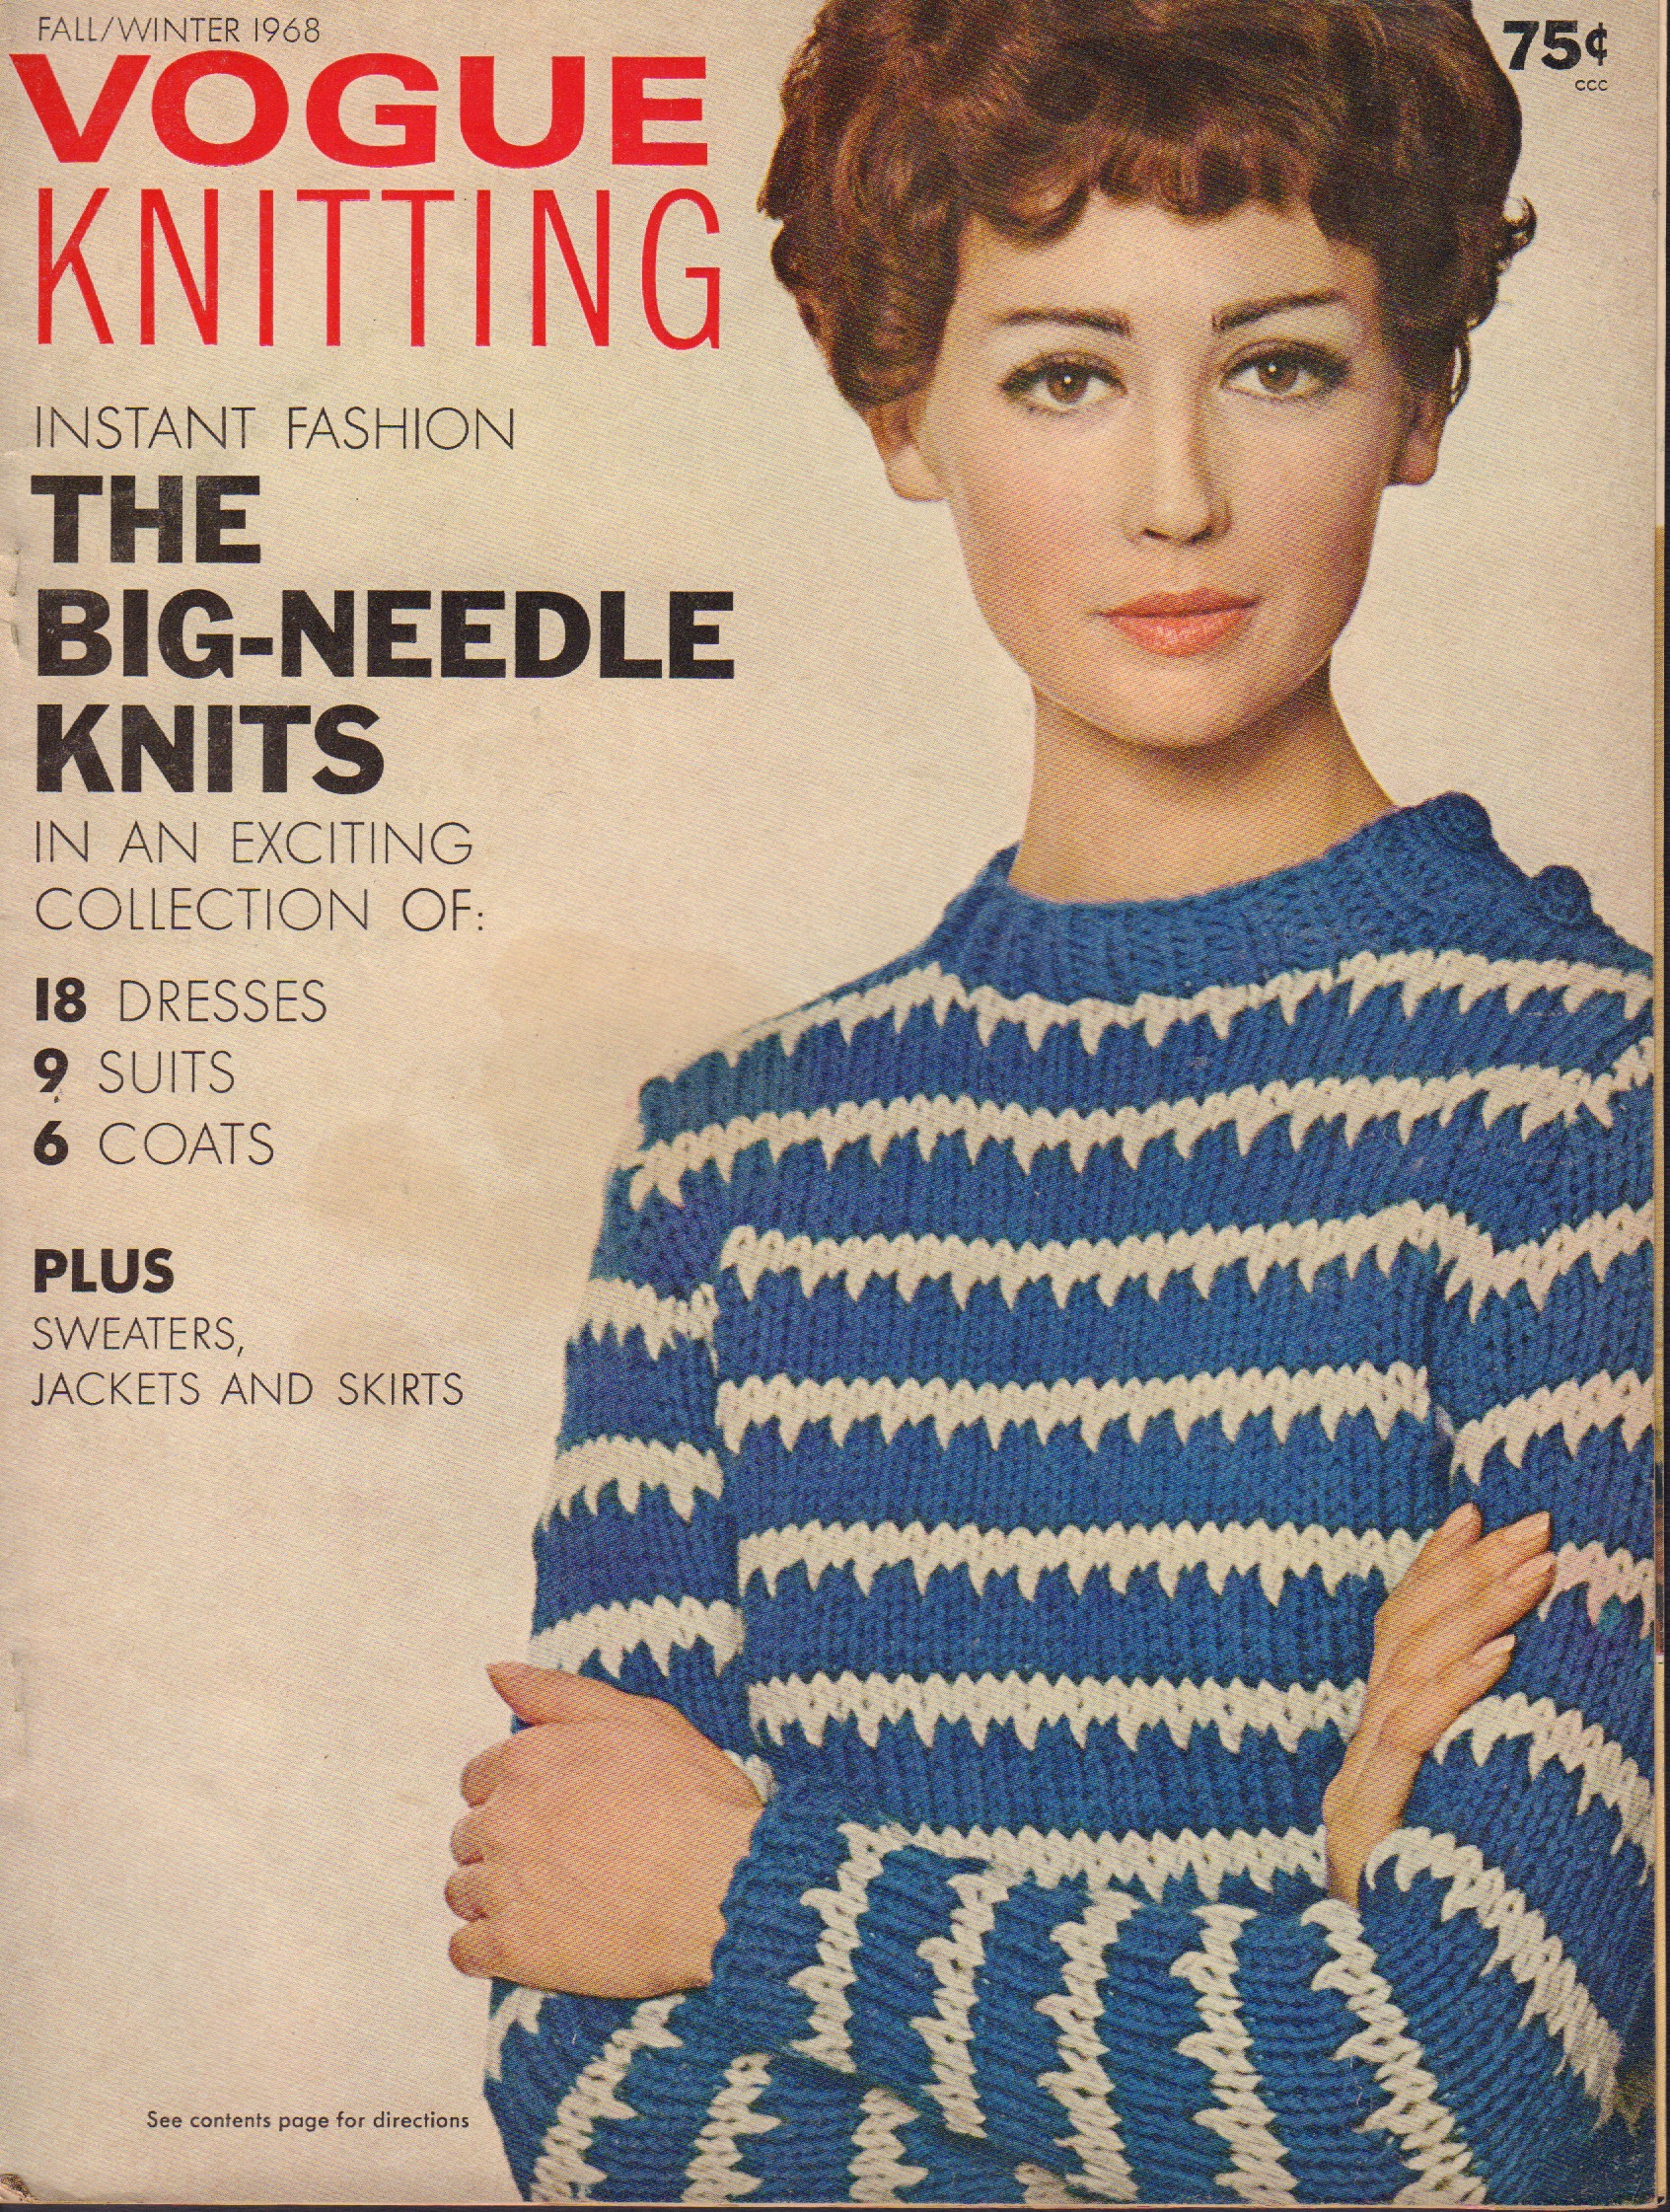 Vogue Knitting Fall/Winter 1968